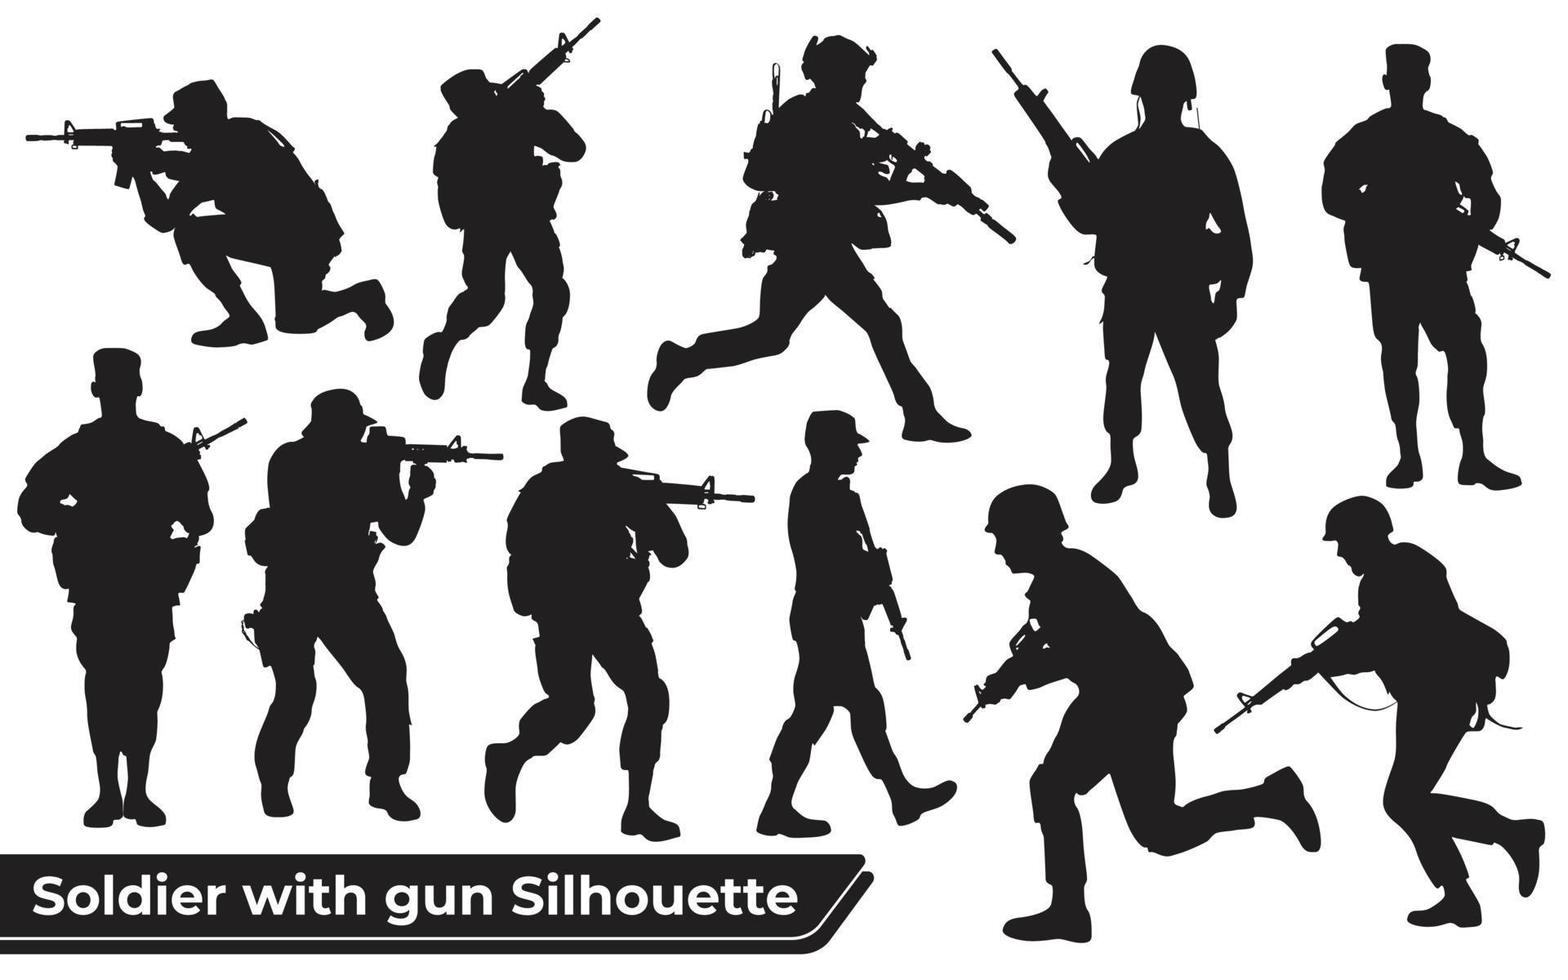 samling av soldat med pistol silhuetter i olika poser vektor